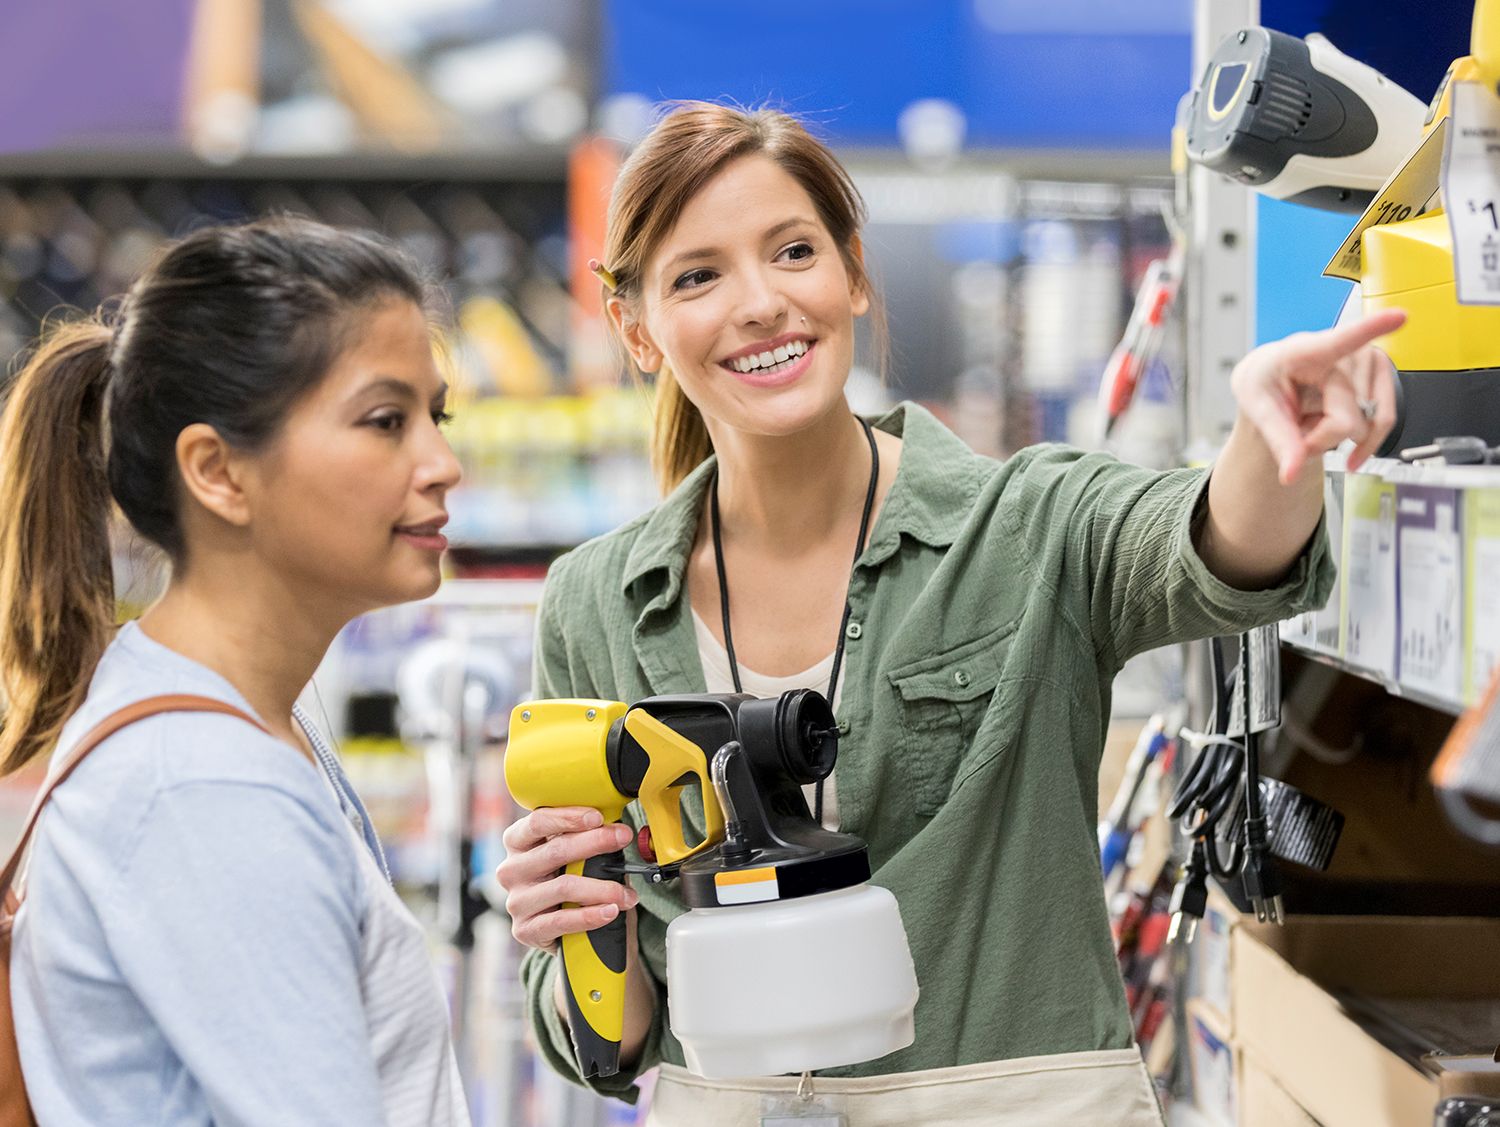 Retail associate helping customer in hardware store